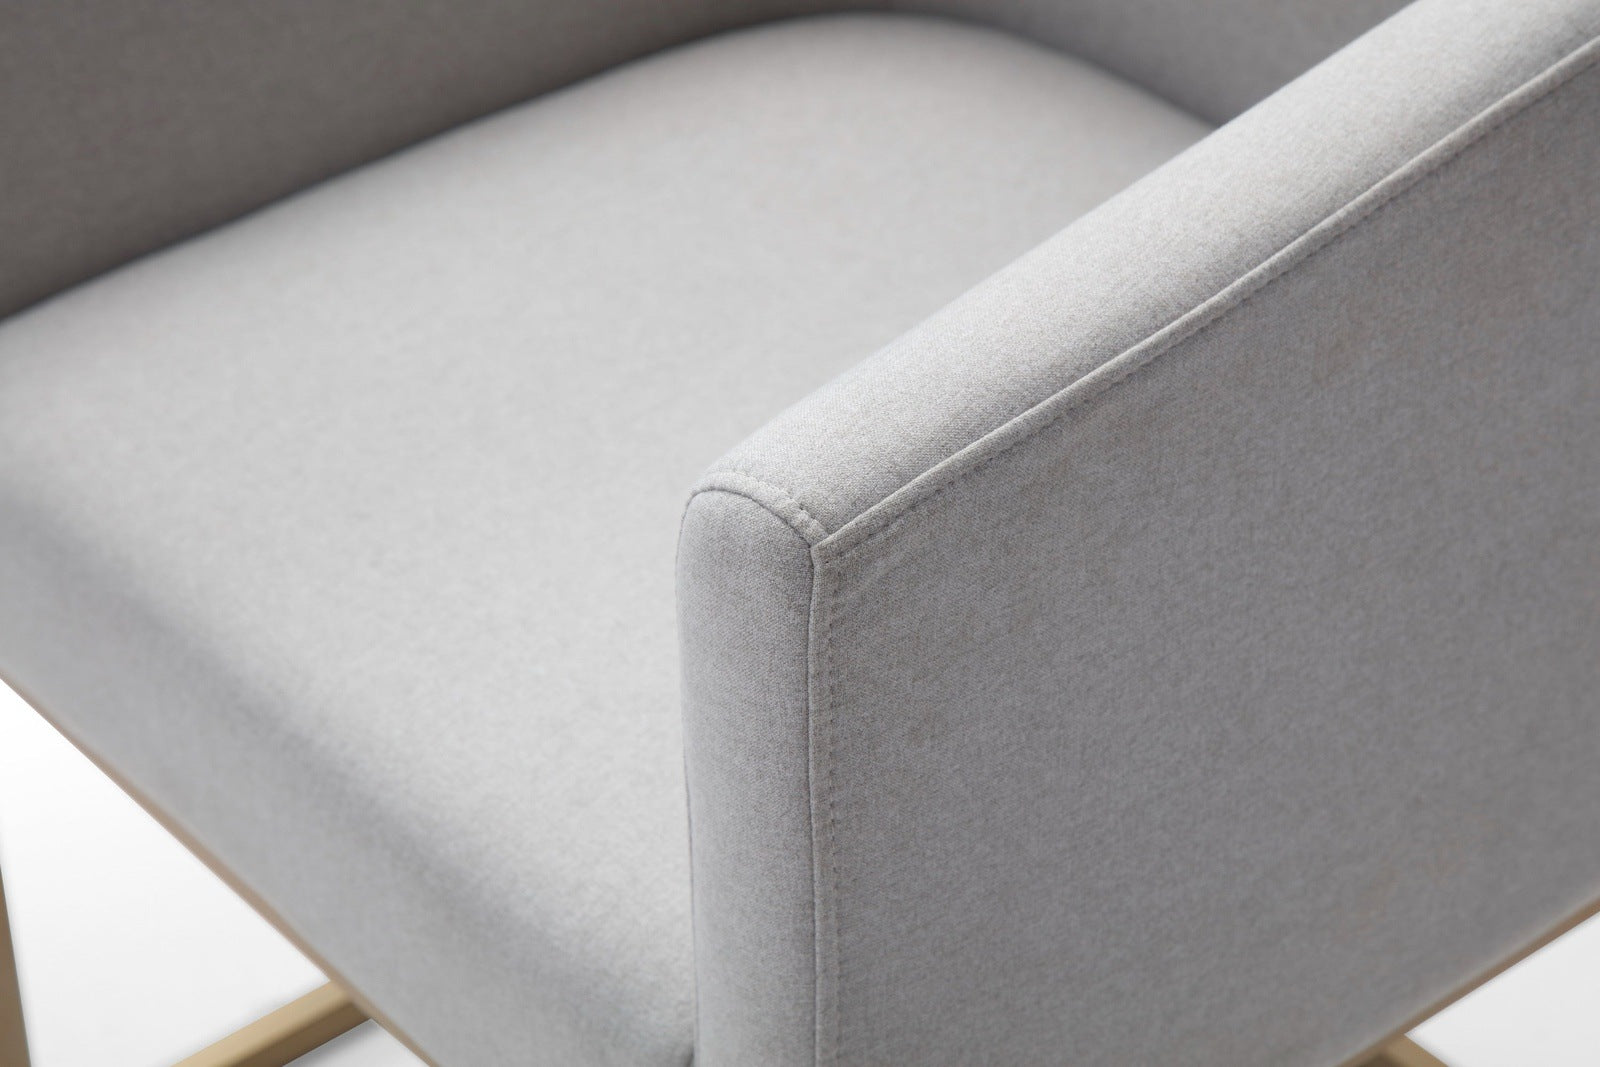 Modrest Yukon Modern Light Grey Fabric & Antique Brass Dining Chair